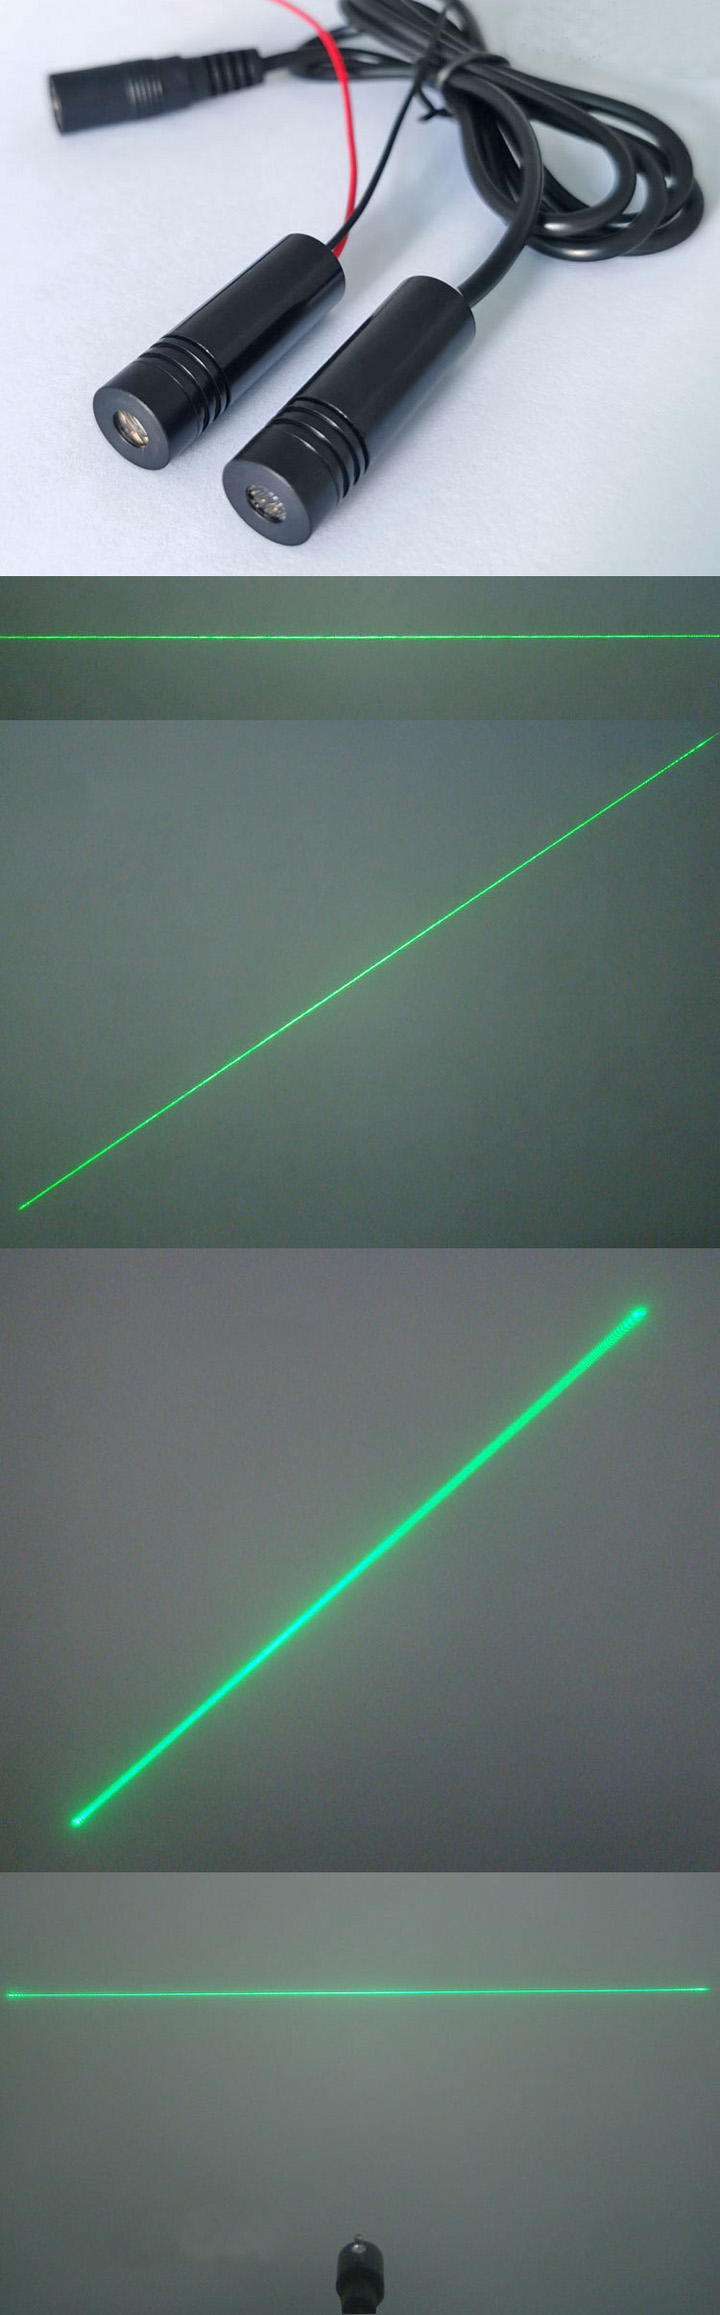 modulo laser verde linea